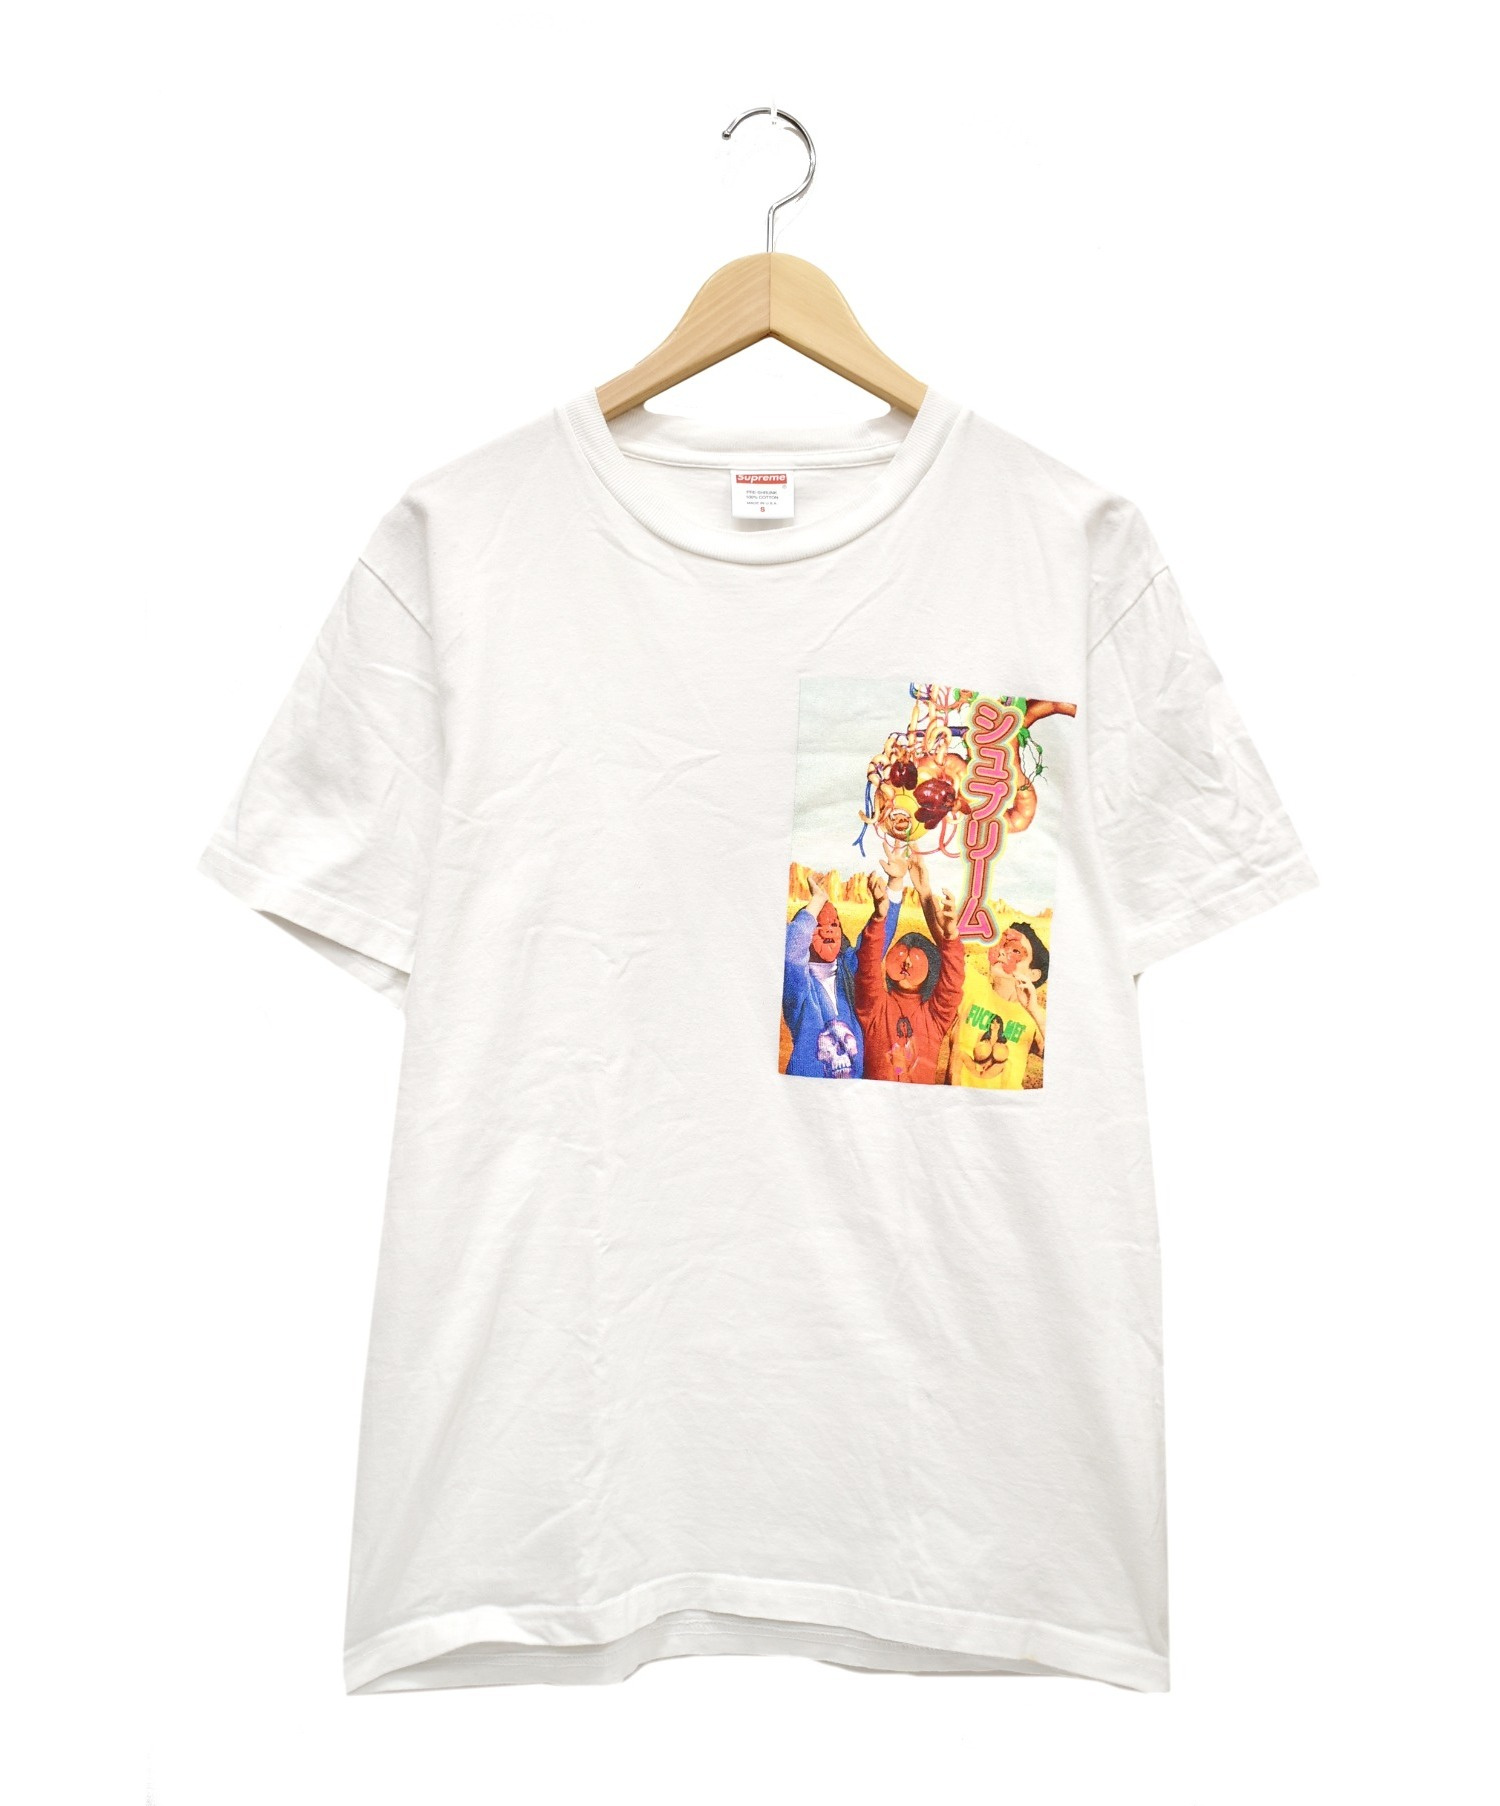 Supreme シュプリーム プリントtシャツ ホワイト サイズ S Rn 1017 ブランド古着の通販サイト ブランドコレクト